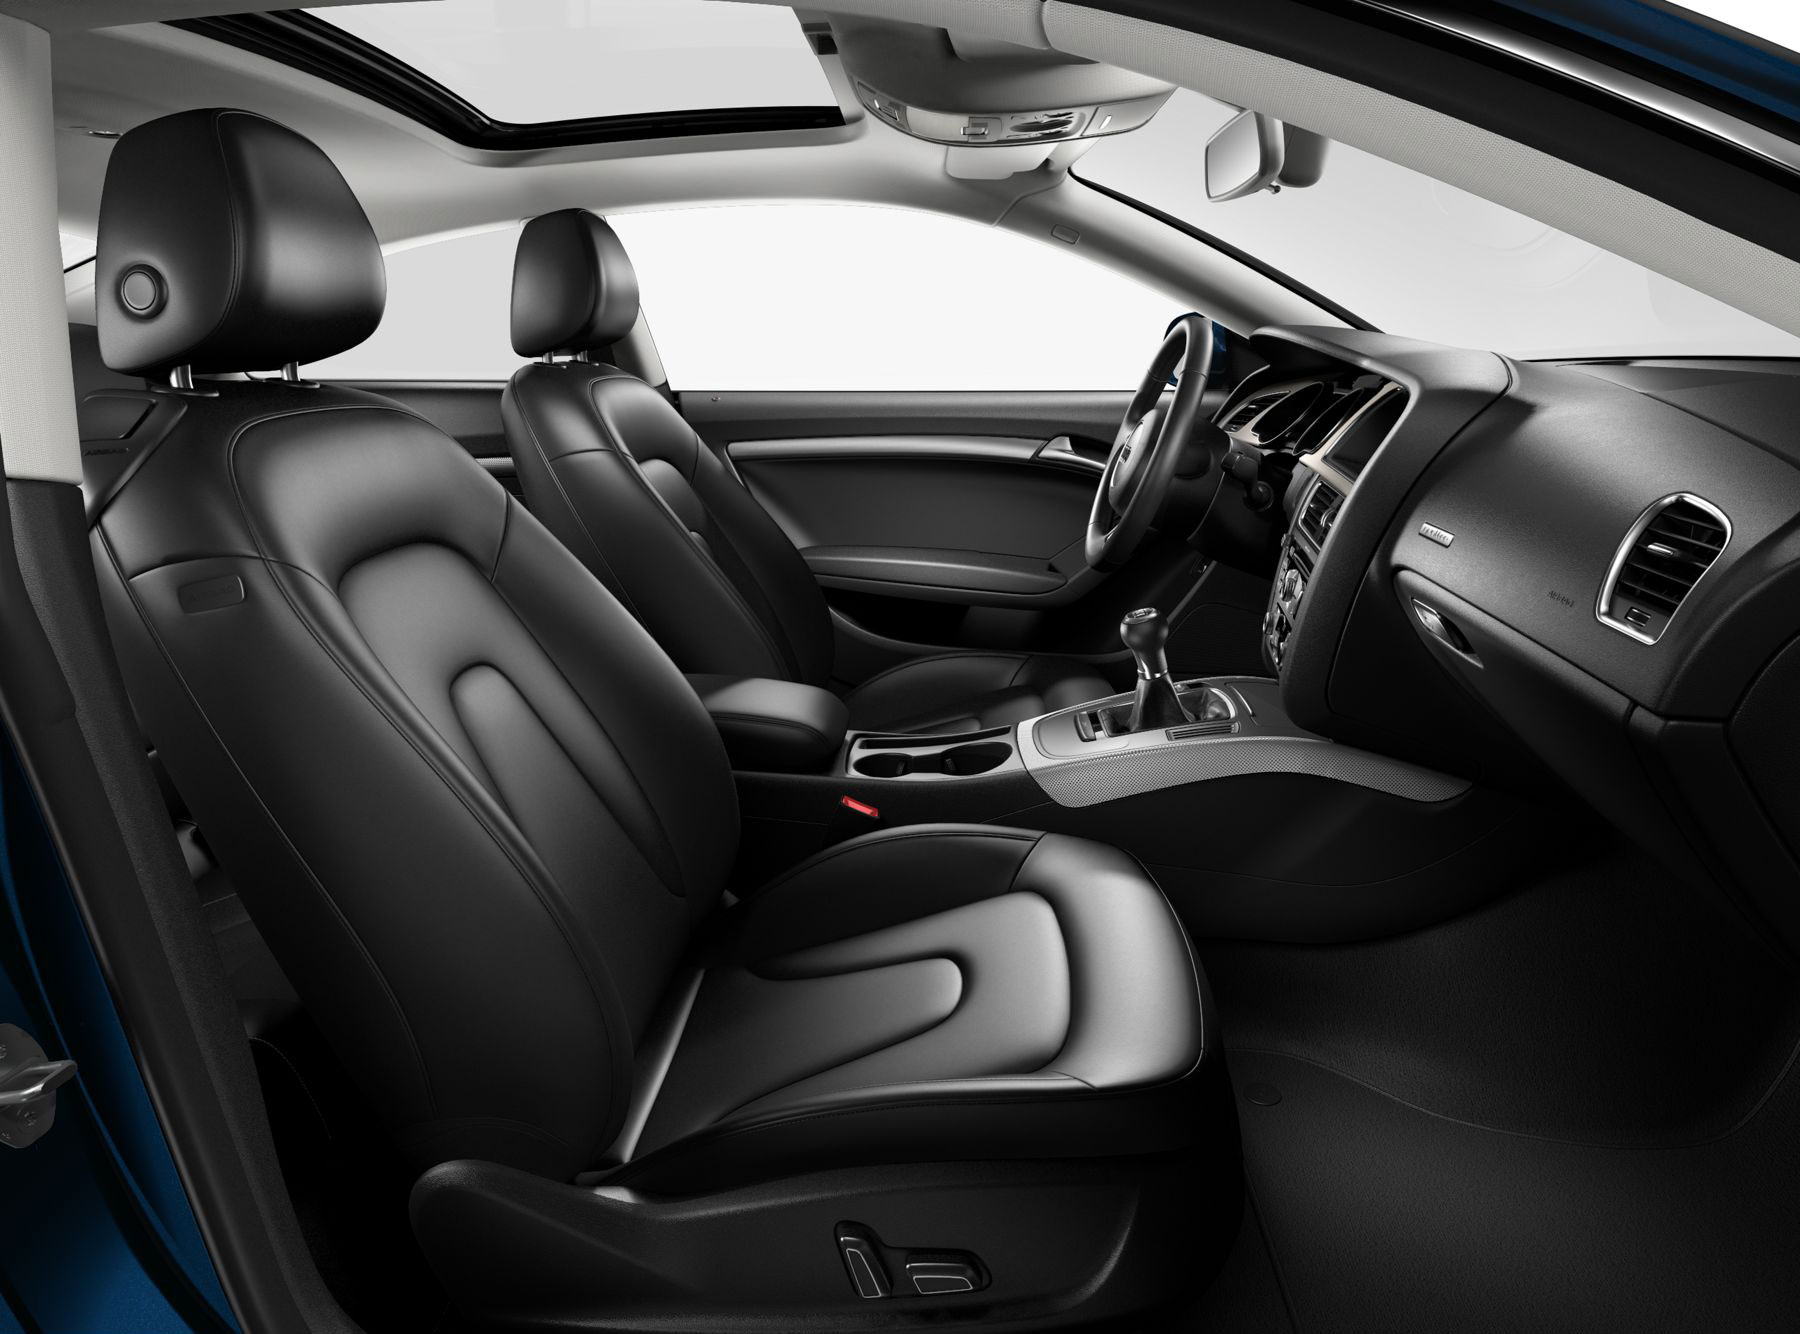 Audi A5 Premium Plus Coupe 2016 front side view